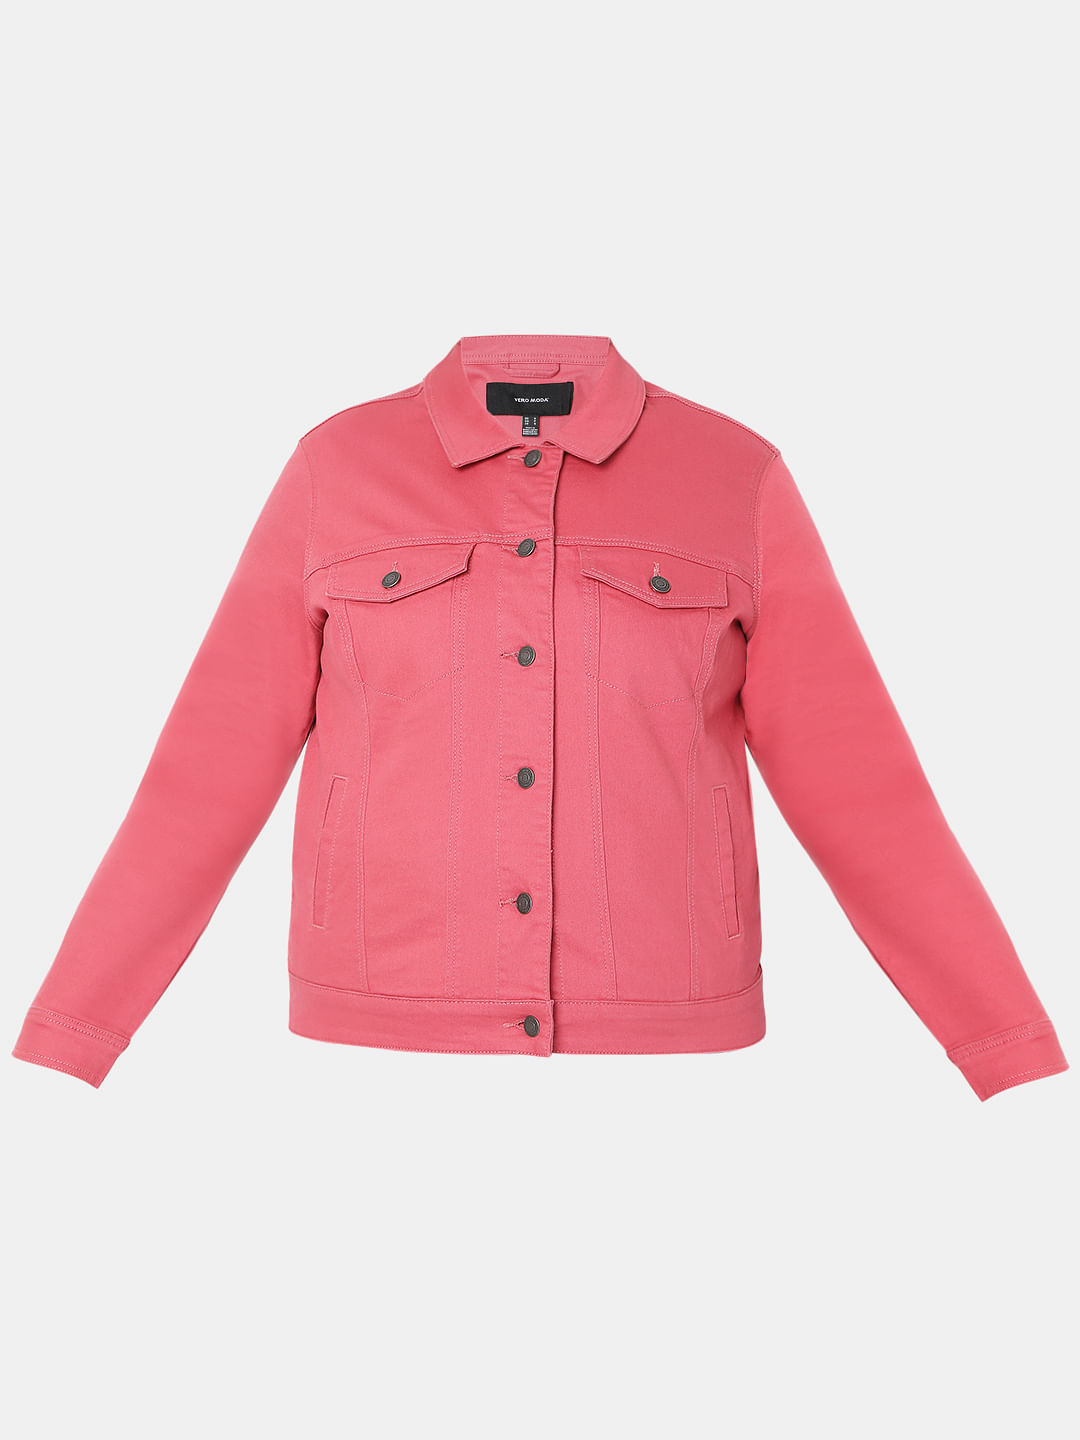 Buy ARBIA FUNKI Men Full Sleeve Denim Jacket Pink s at Amazonin